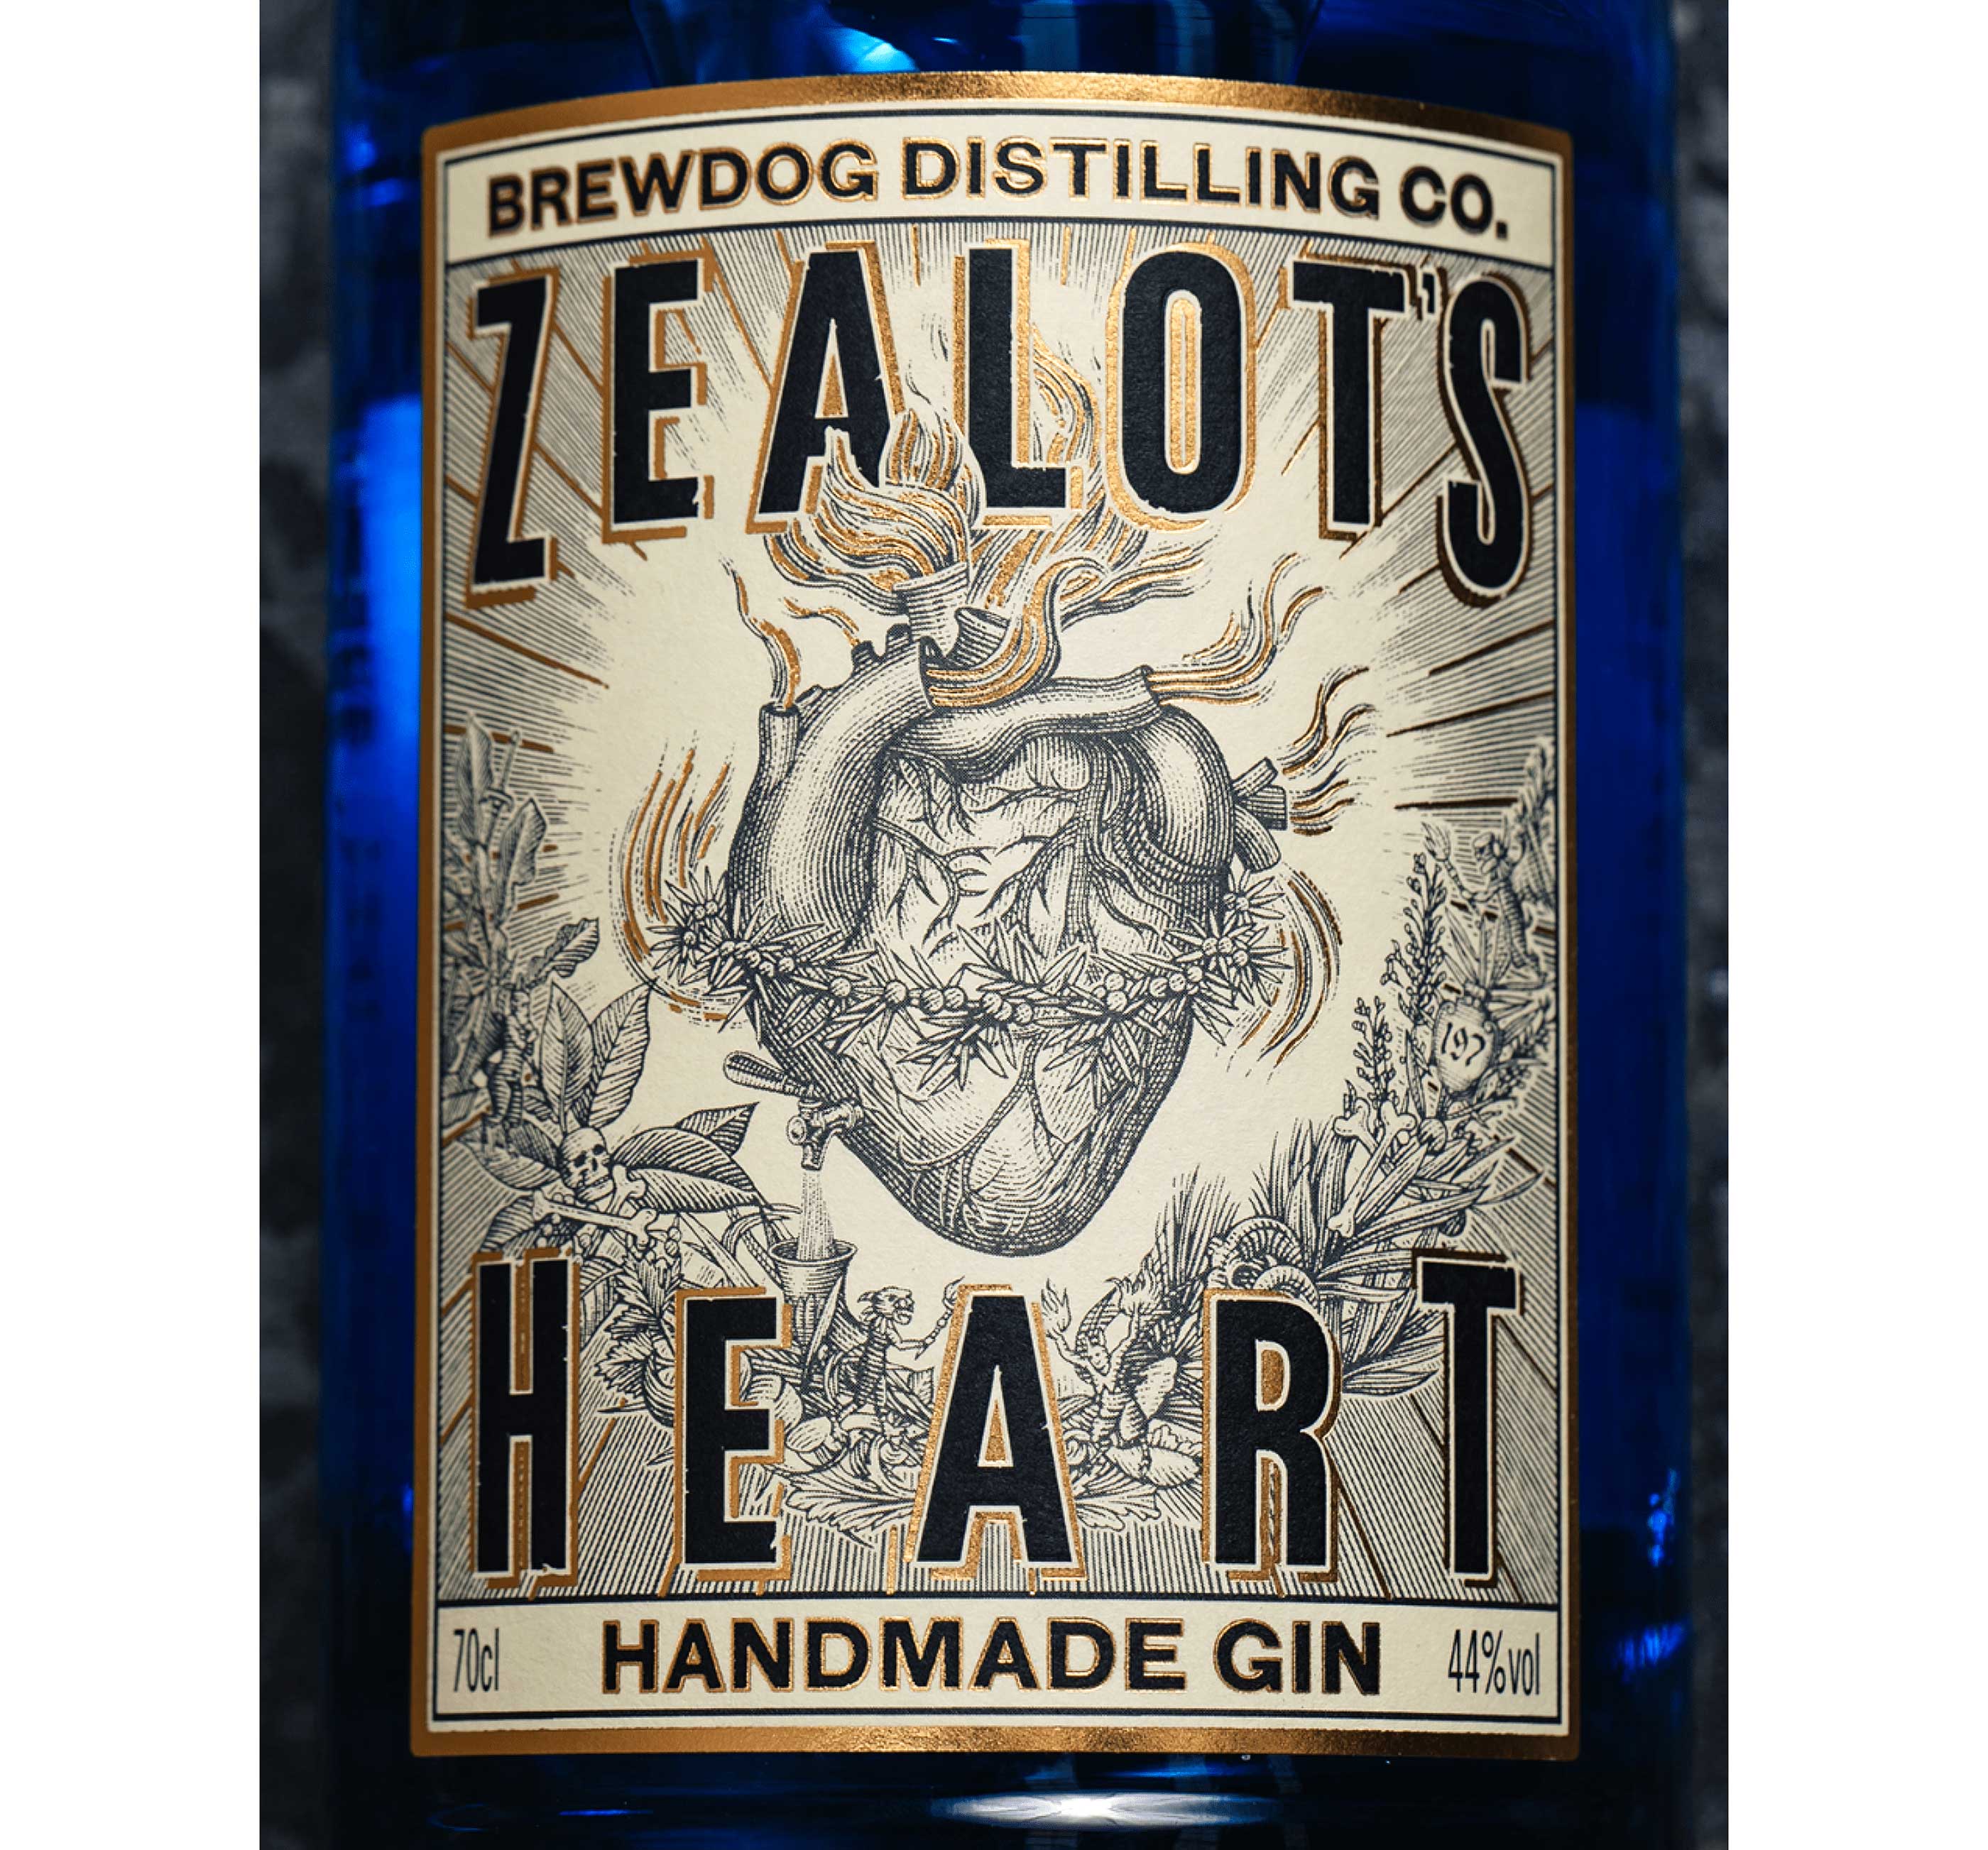 Zealot’s Heart Label Illustrated by Steven Noble